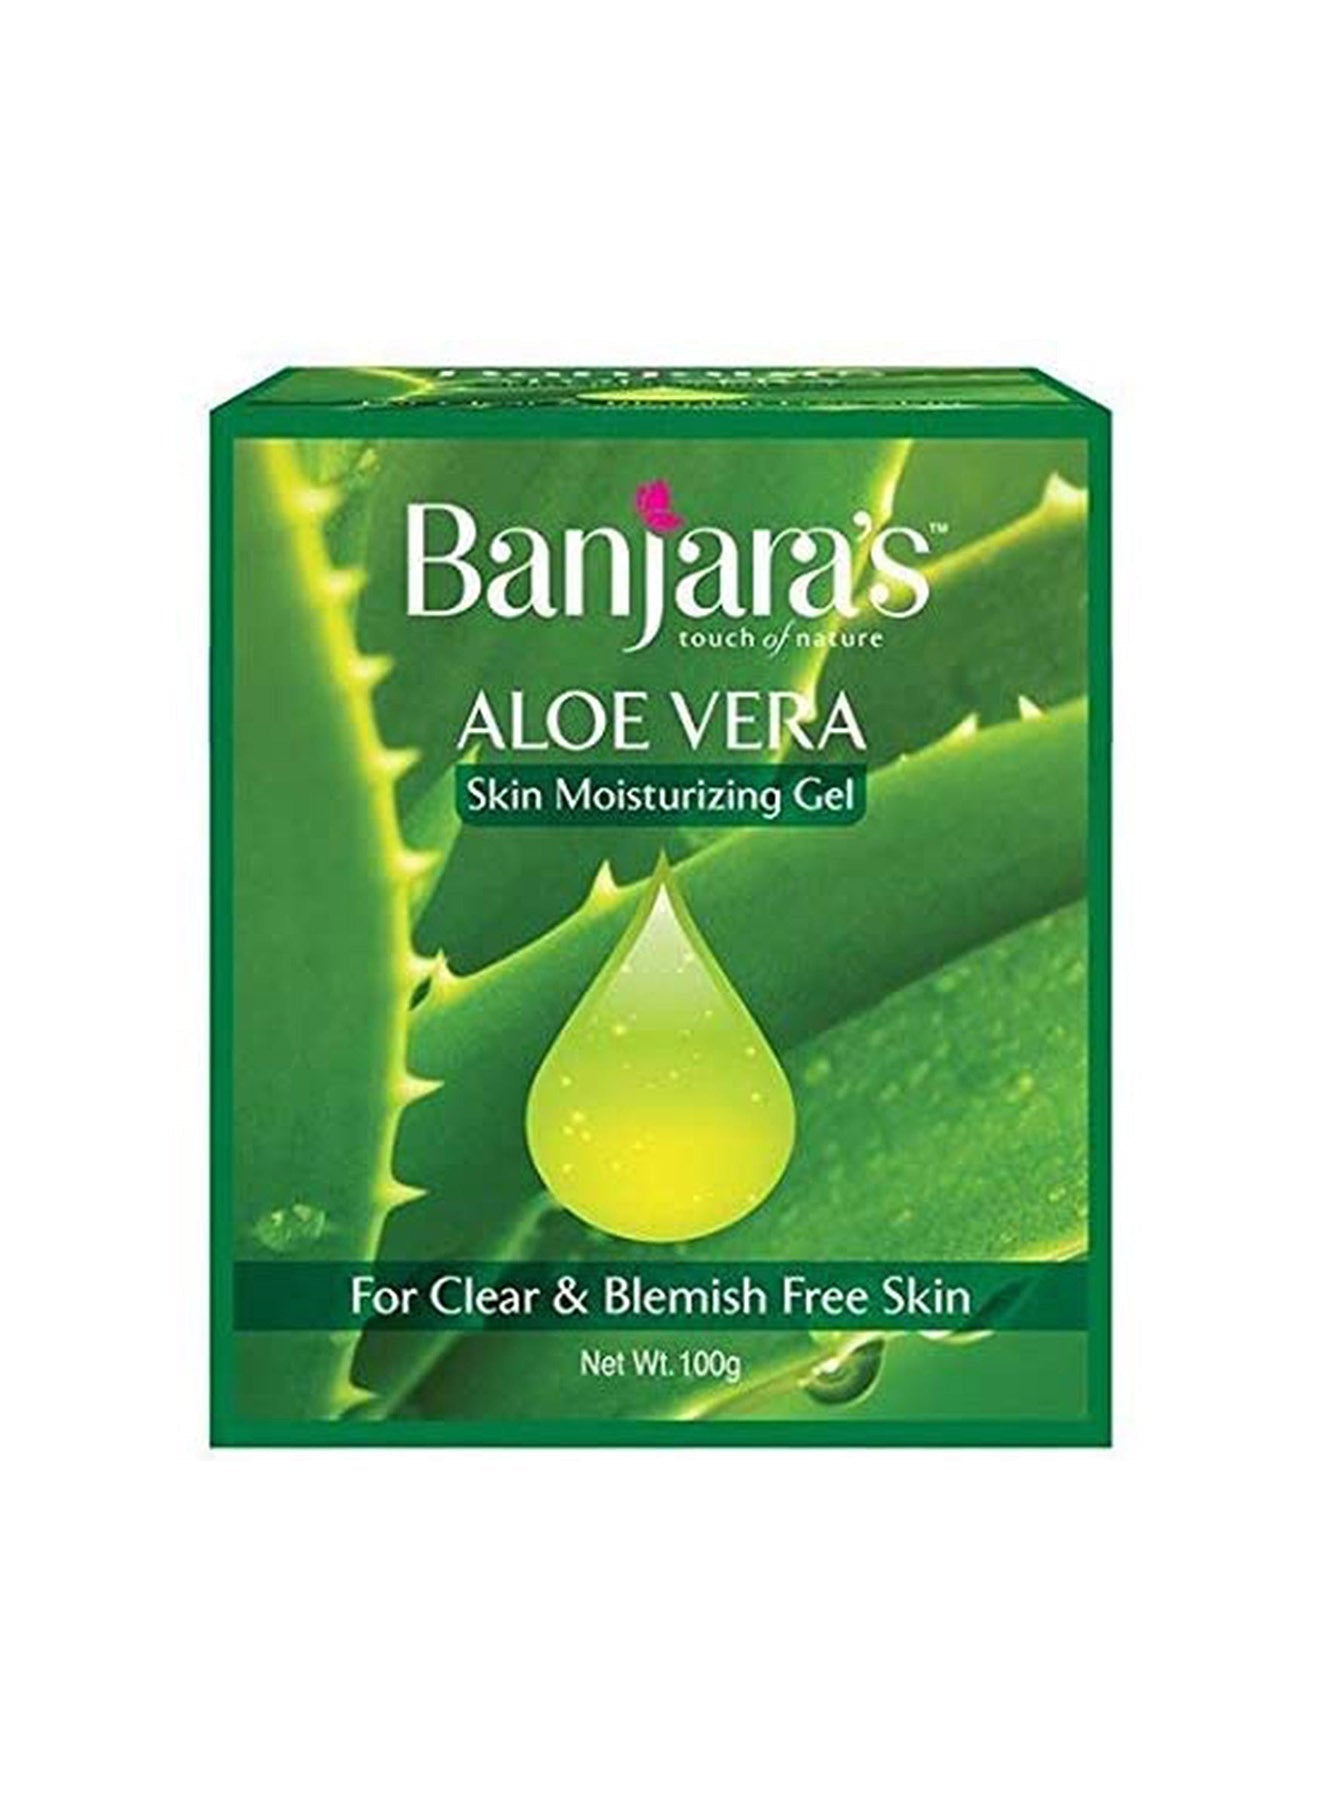 Banjaras Aloe Vera Skin Moisturizing Gel 100g Value Pack of 12 